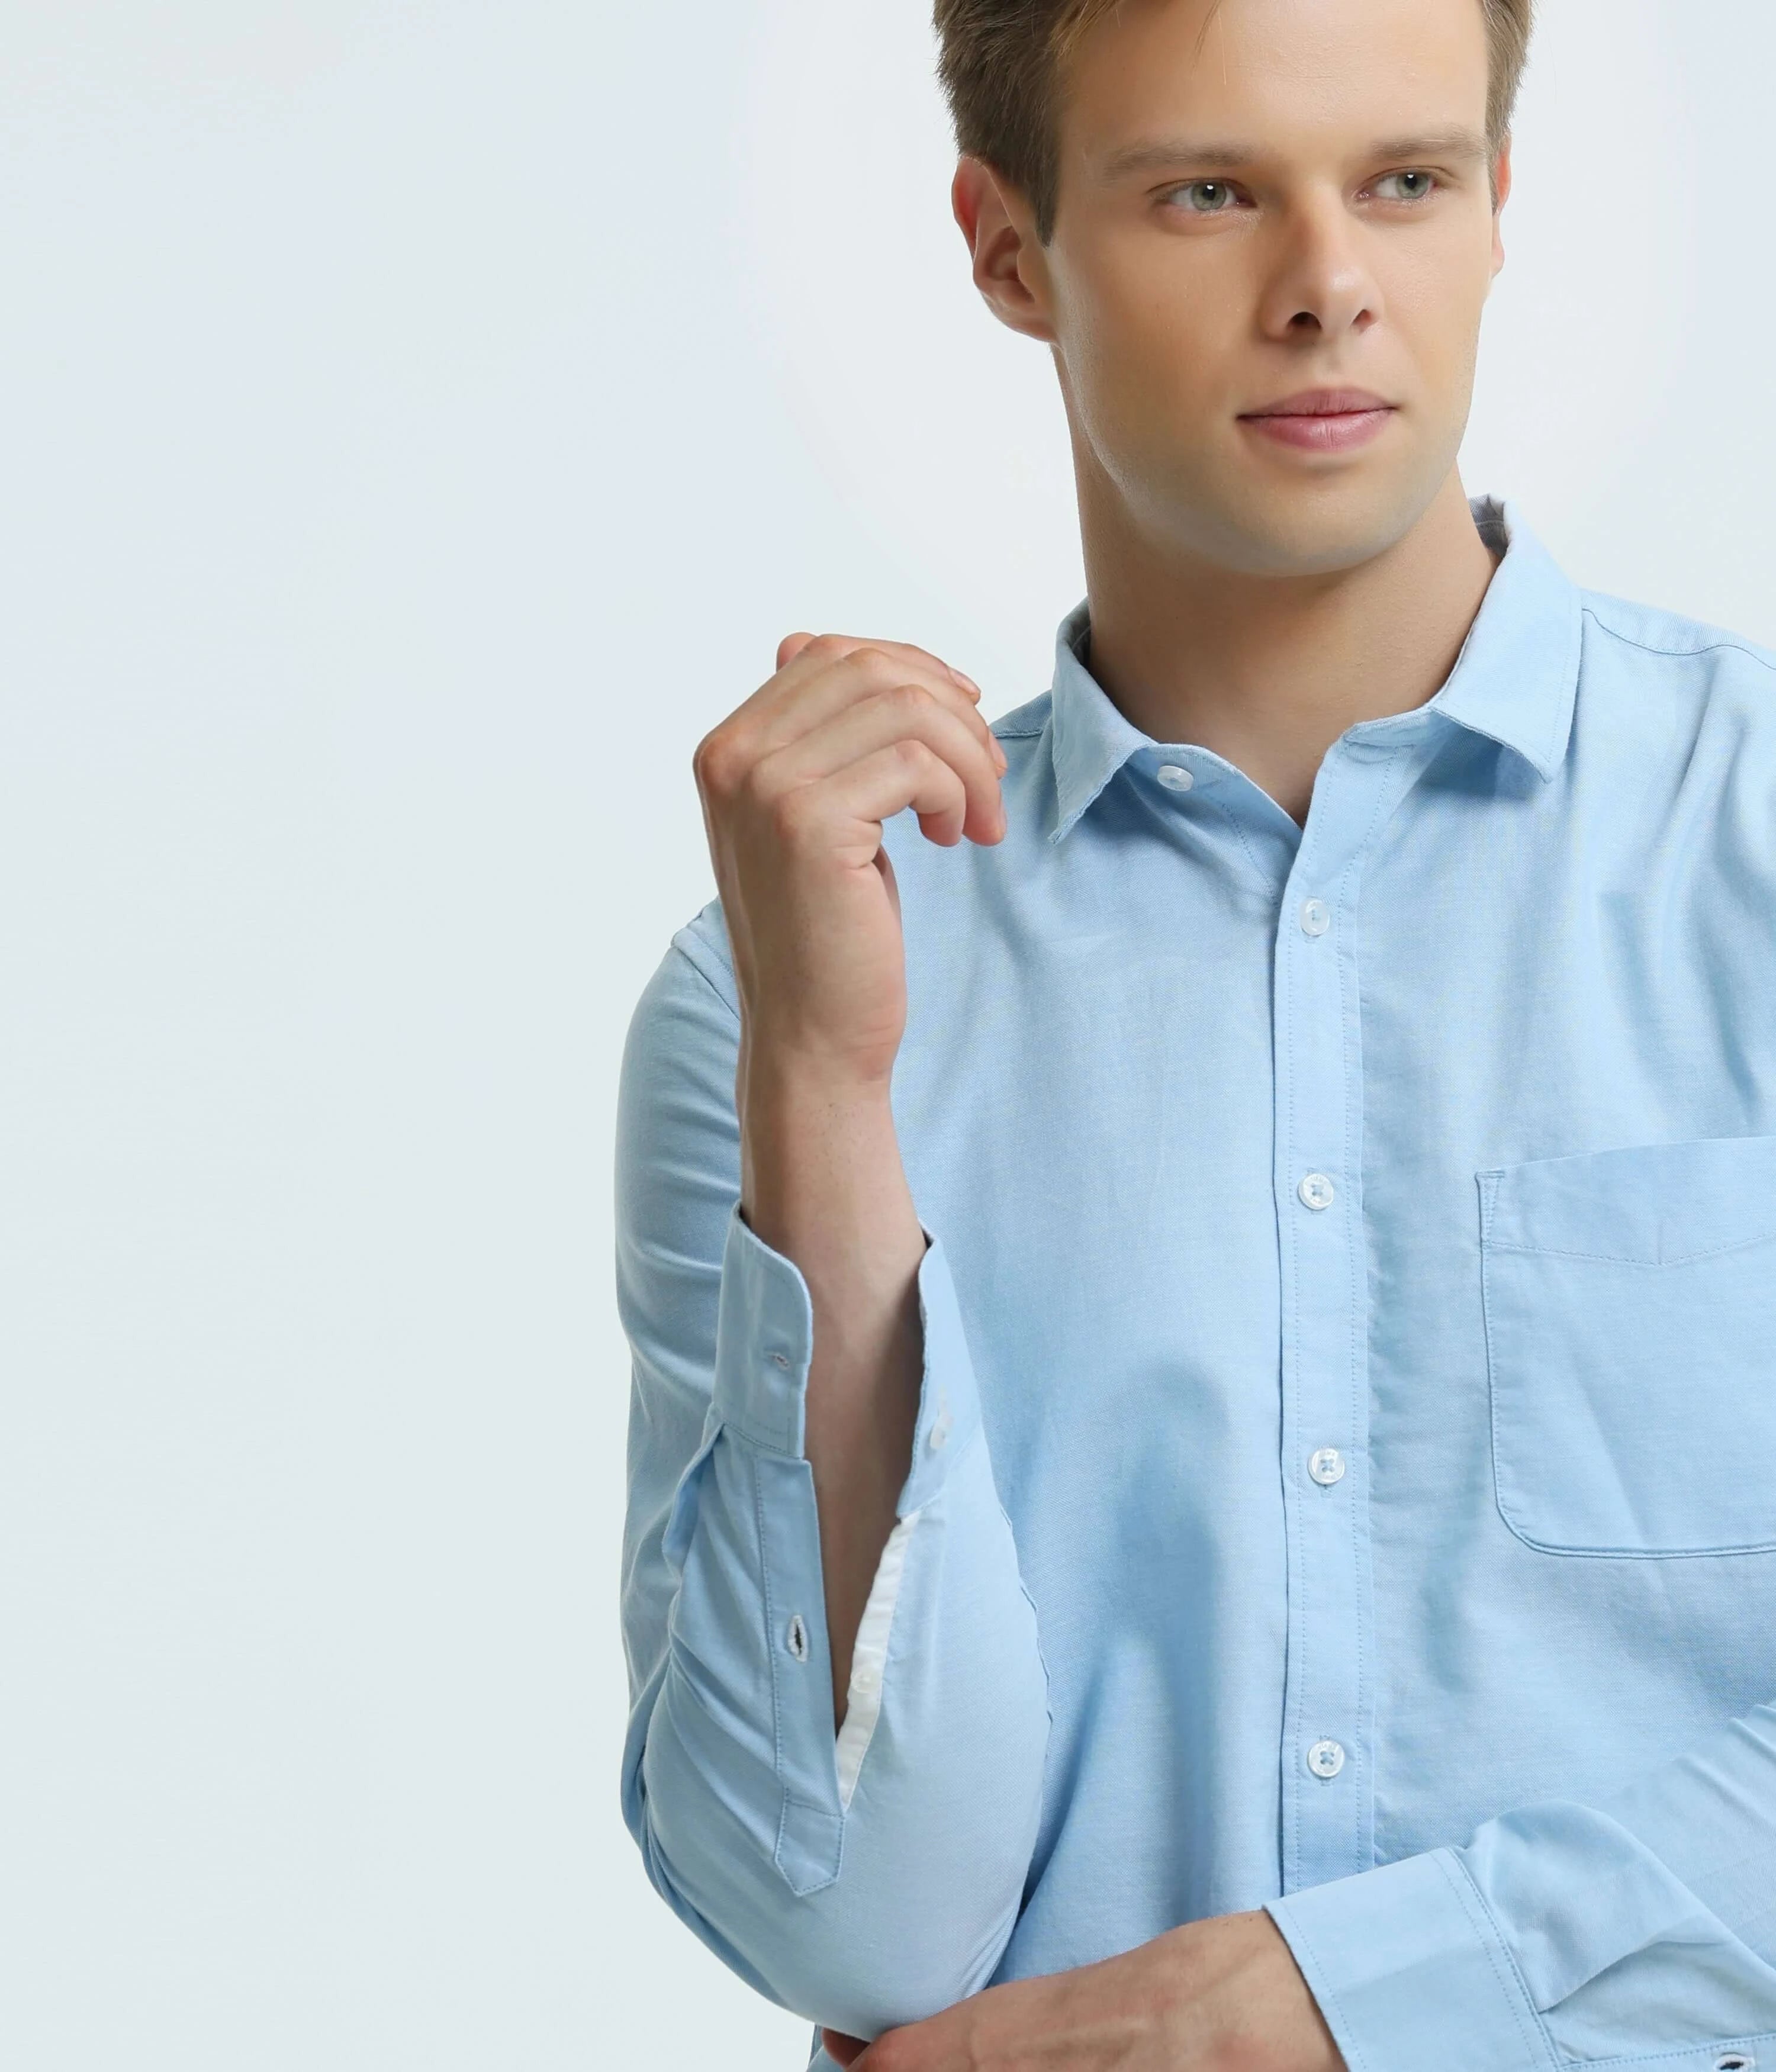 5 shirt pant combination for men | formal shirt combination | formal shirt  pant outfit ideas - YouTube